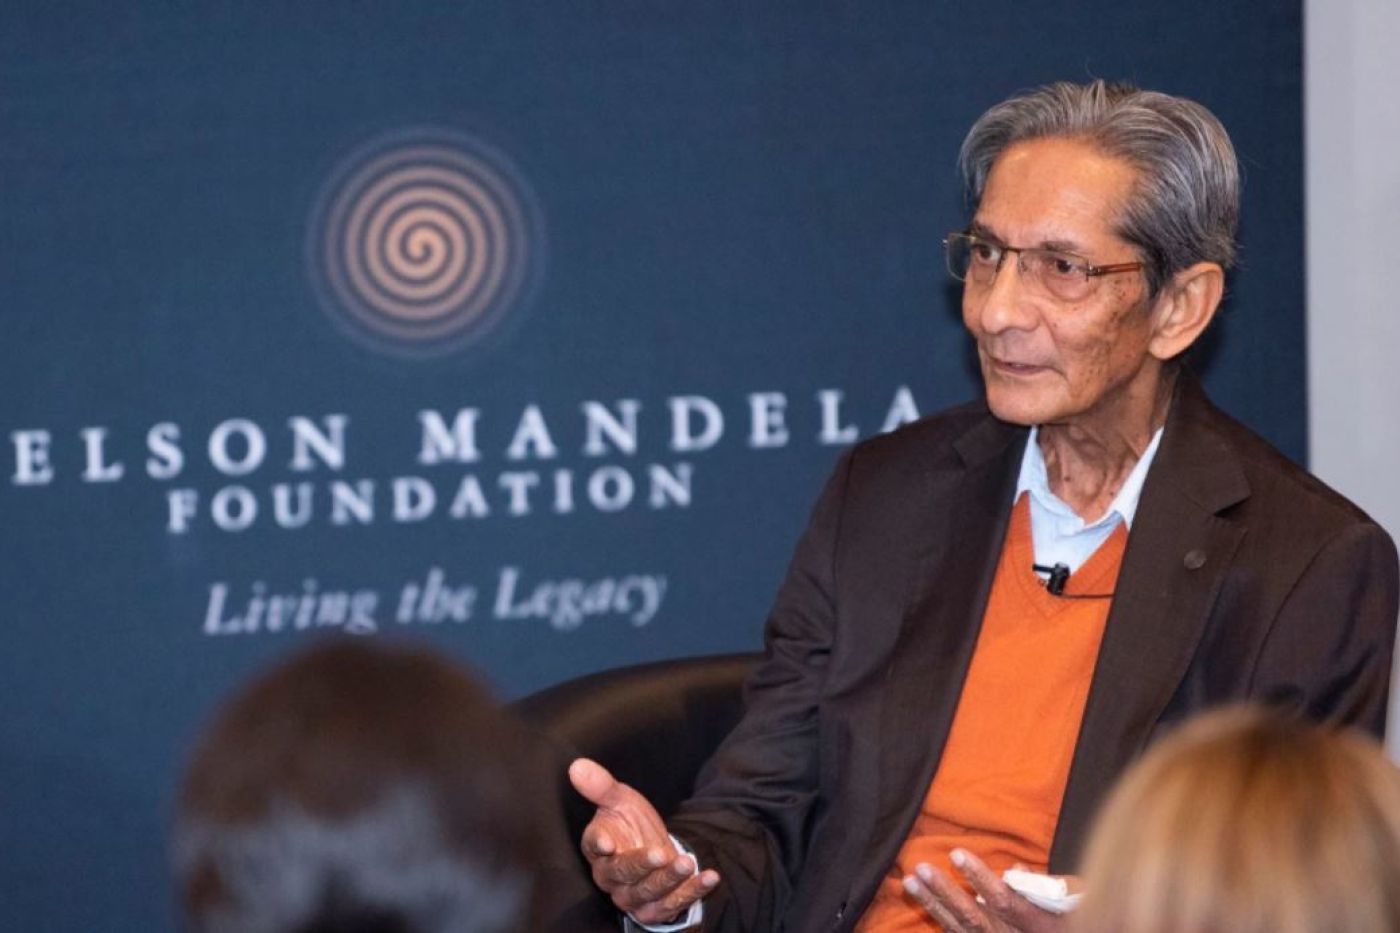 Achmat Dangor speaks at a Nelson Mandela Foundation event